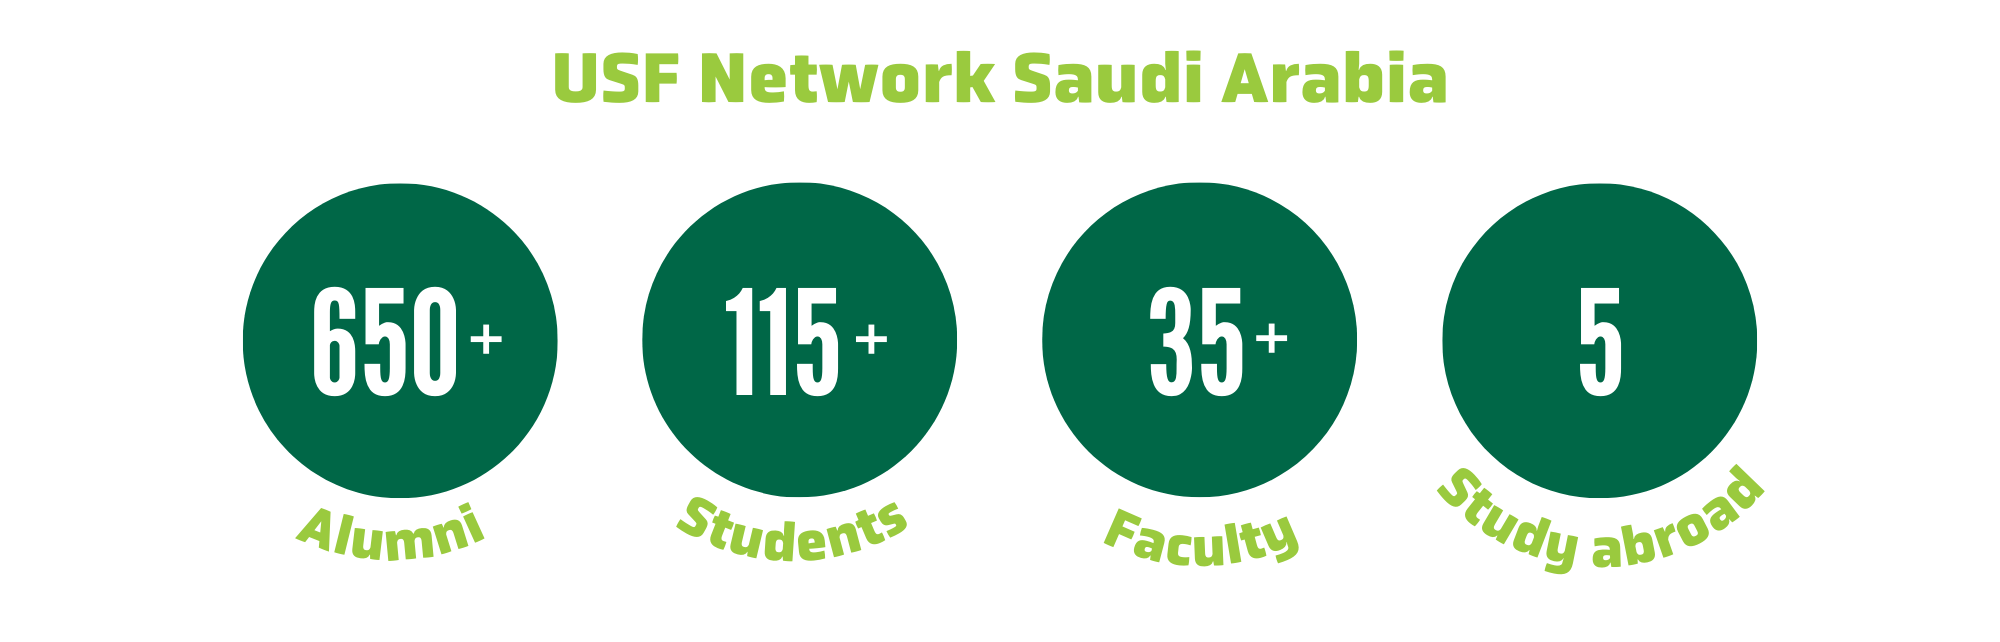 graphic with green bubble metrics for USF Network Saudi Arabia